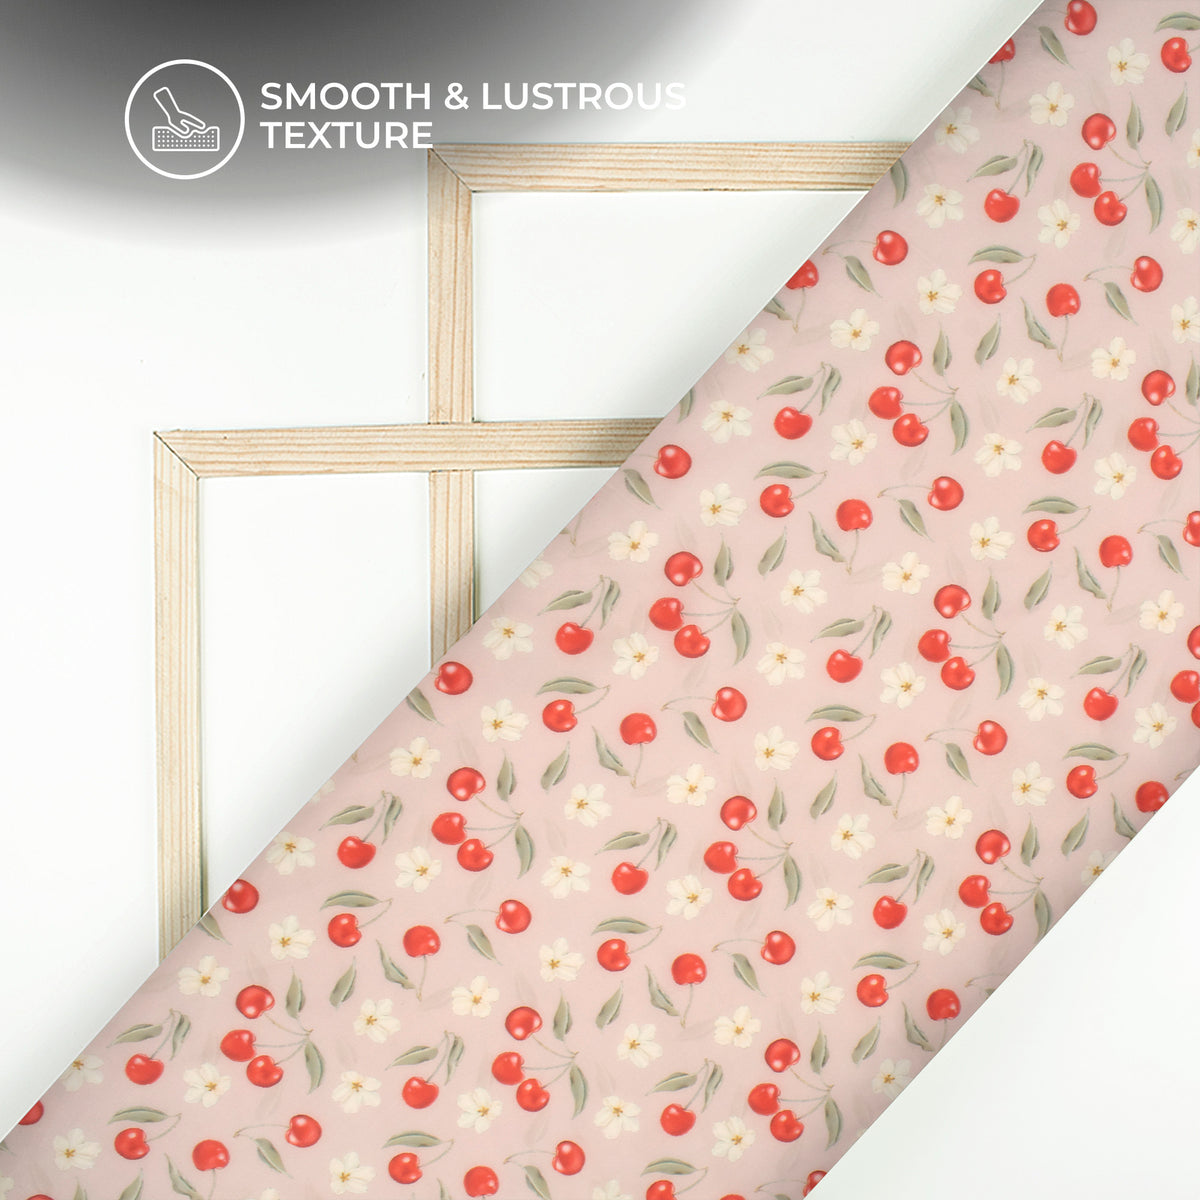 Pastle Salmon Floral Digital Print Organza Satin Fabric